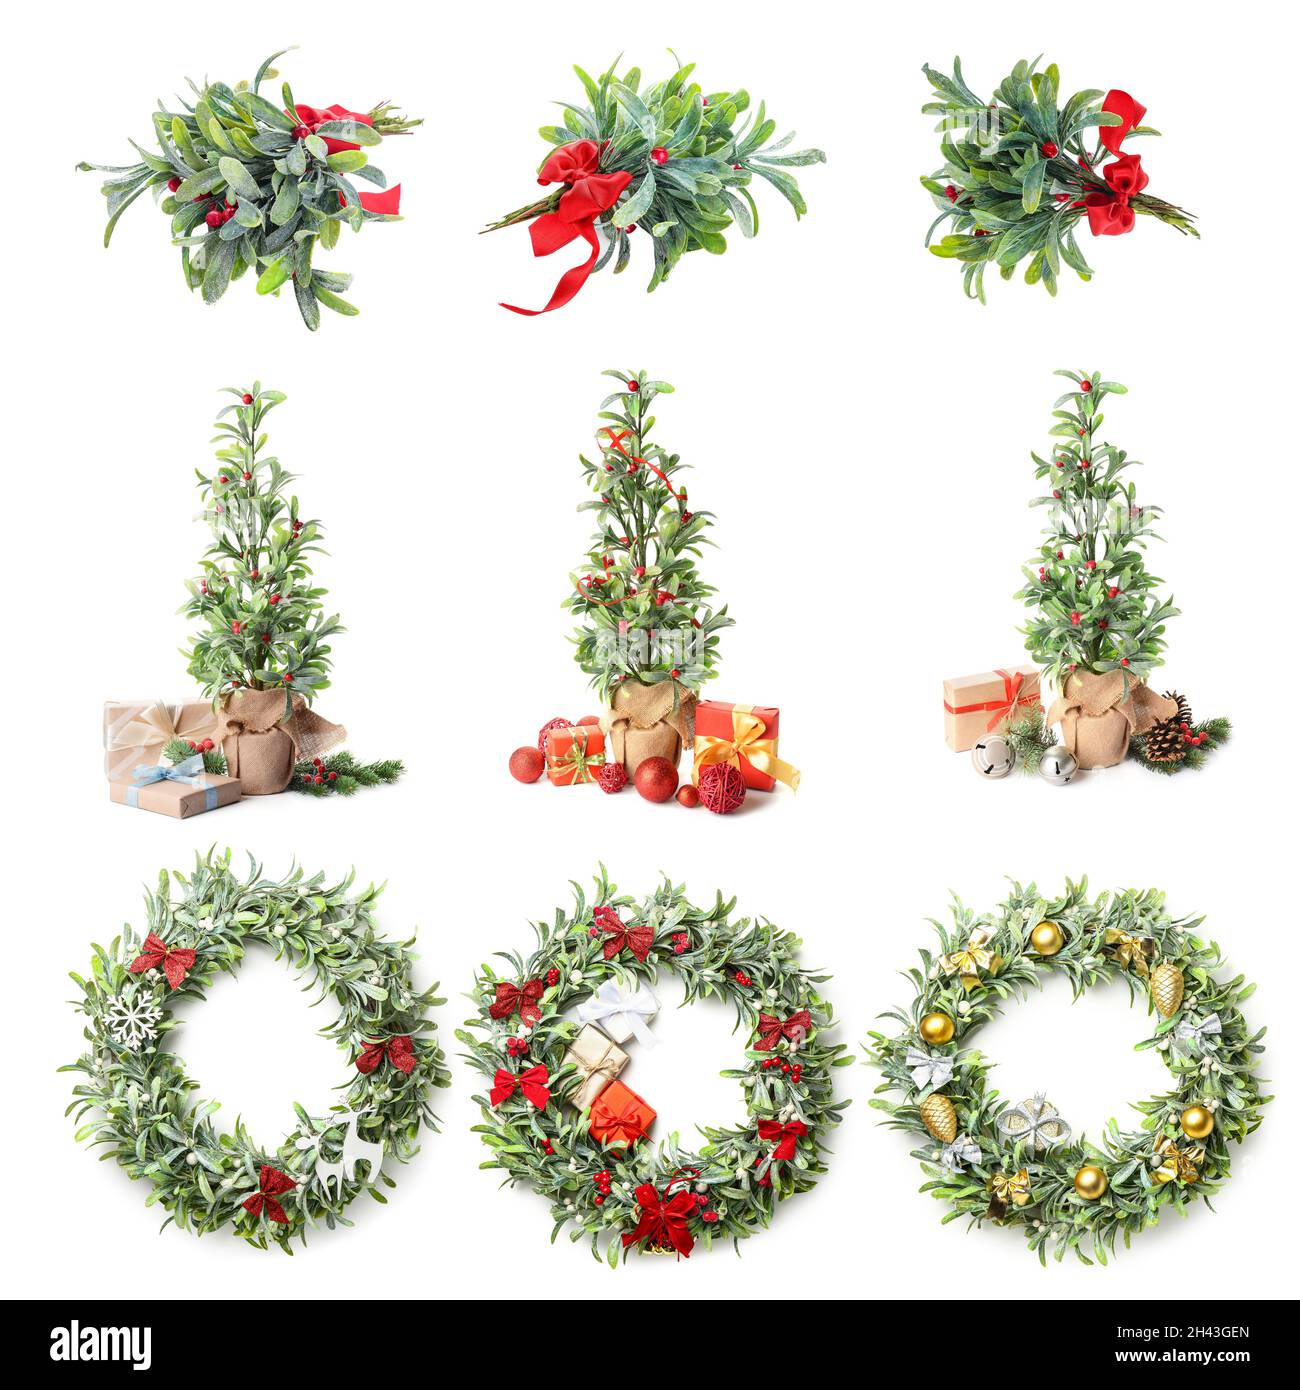 Collection of Christmas mistletoe decor on white background Stock Photo